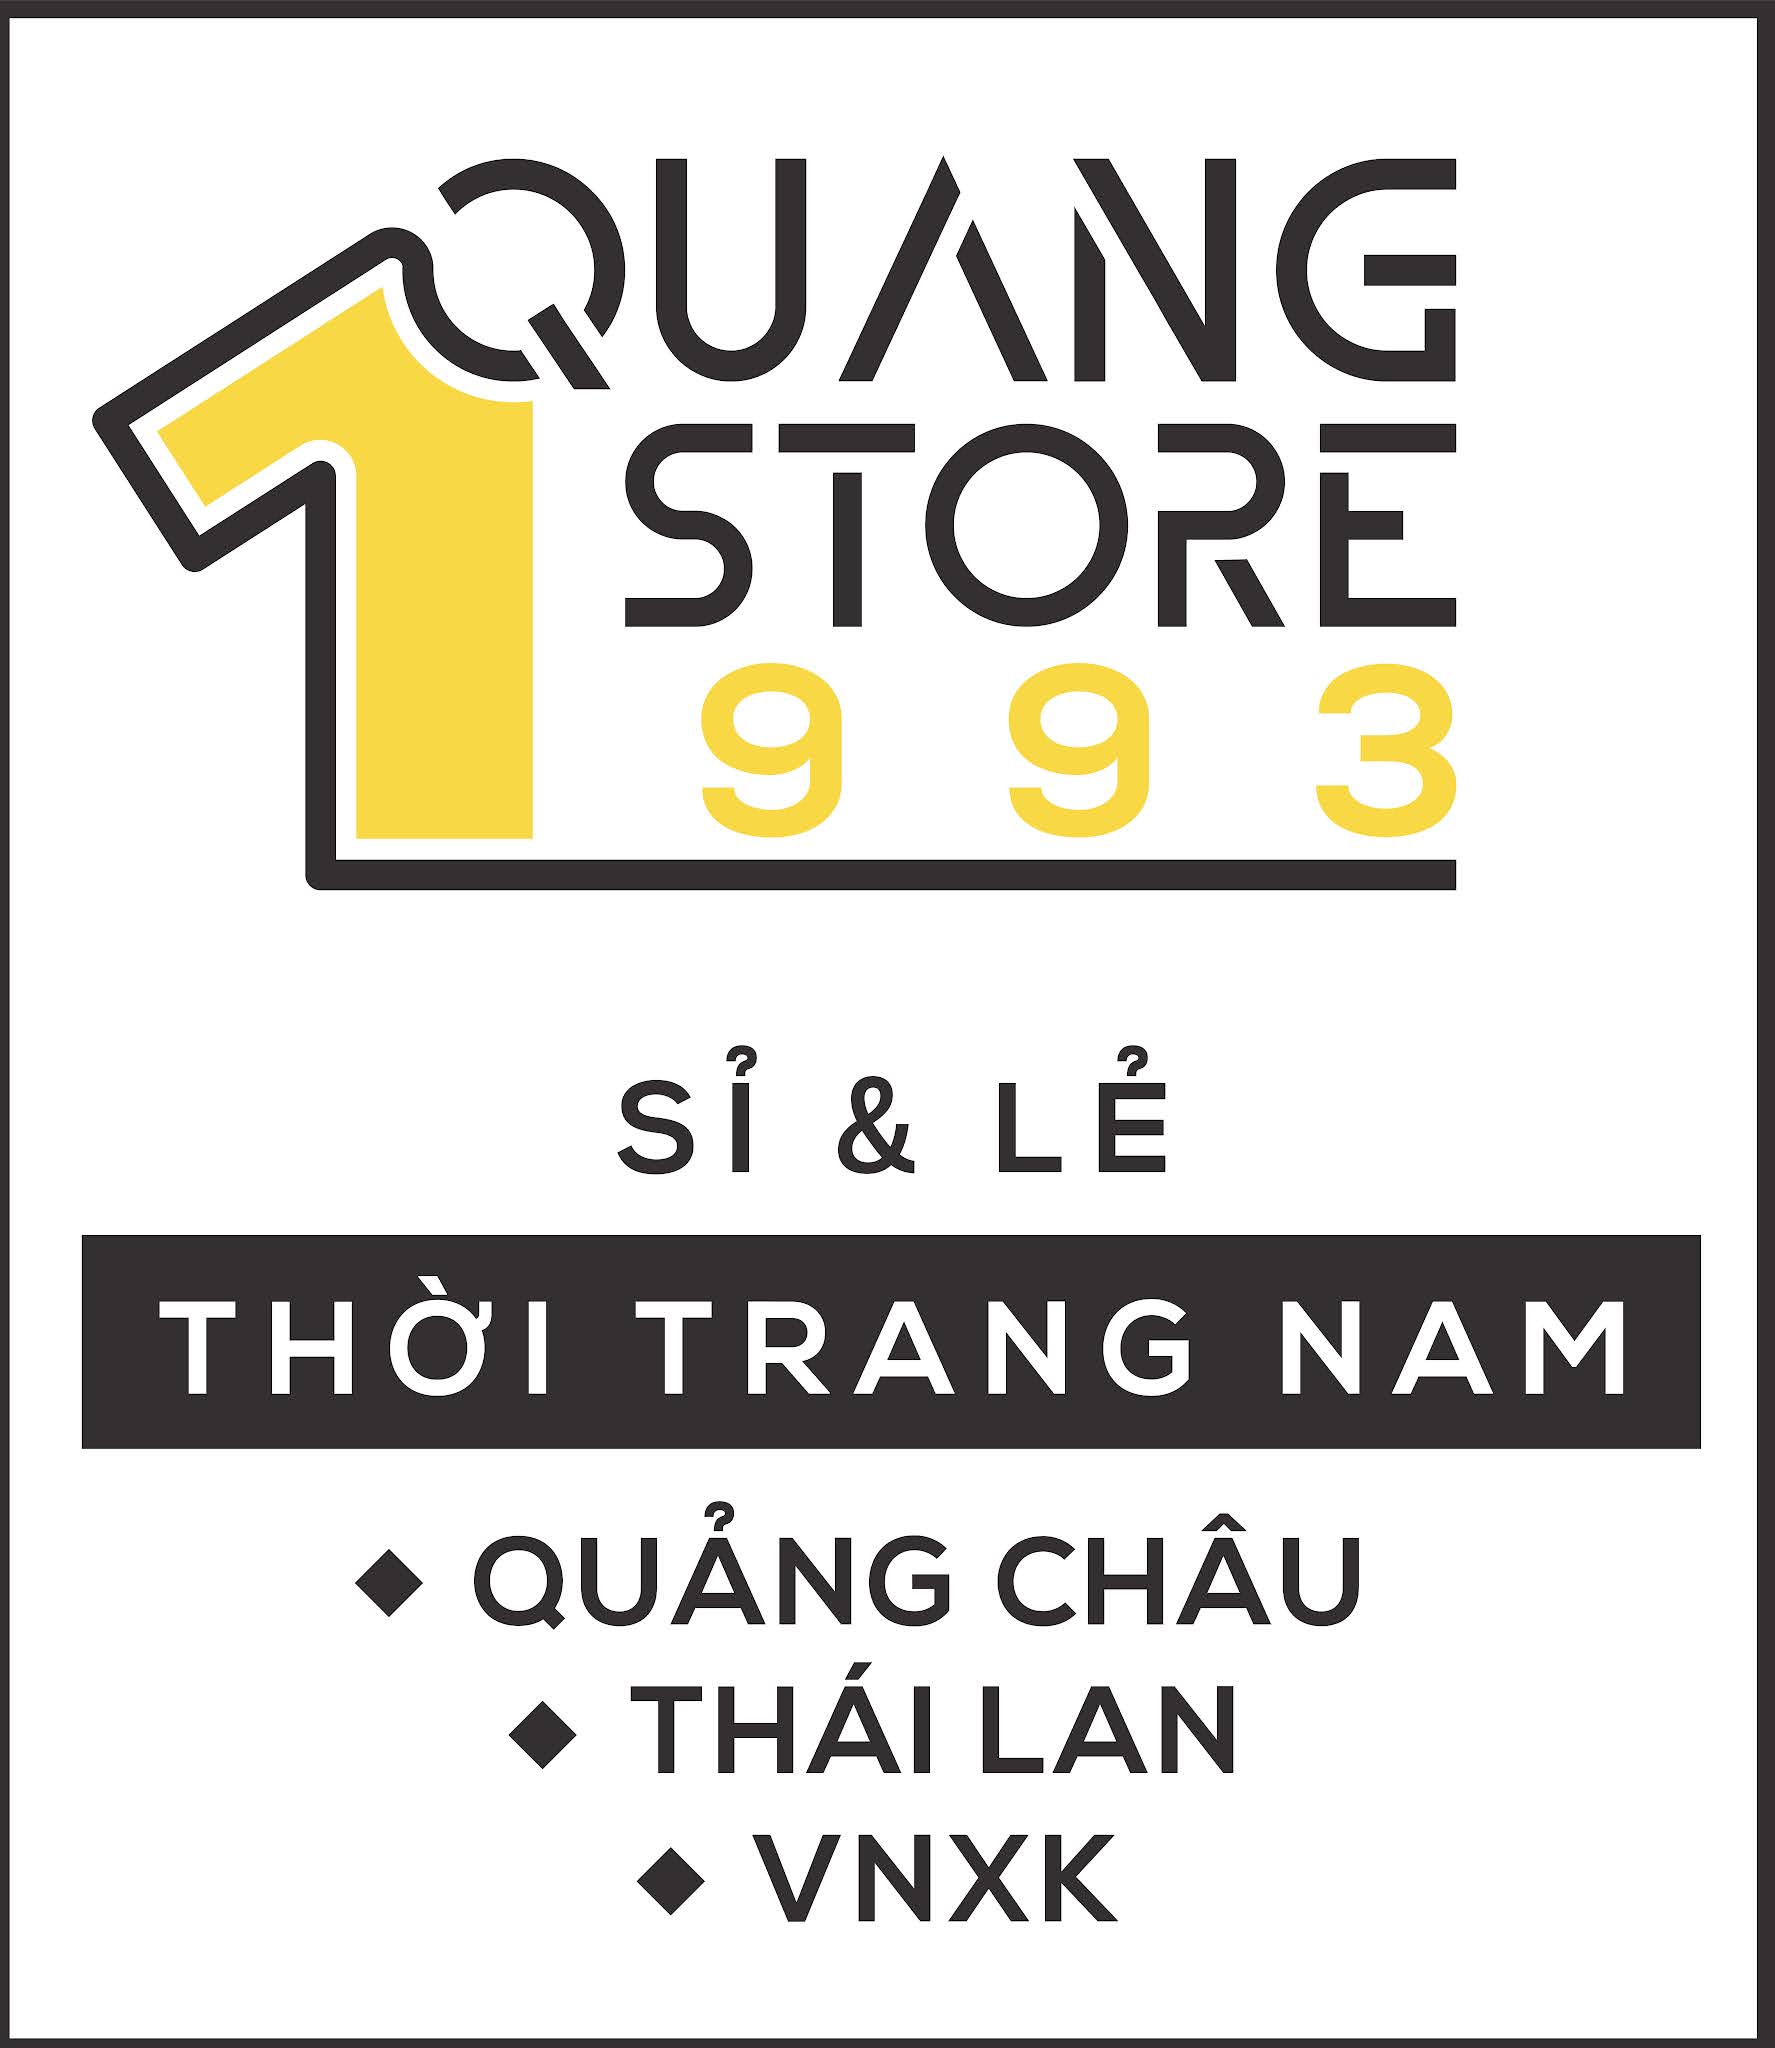 Quang Store 1993